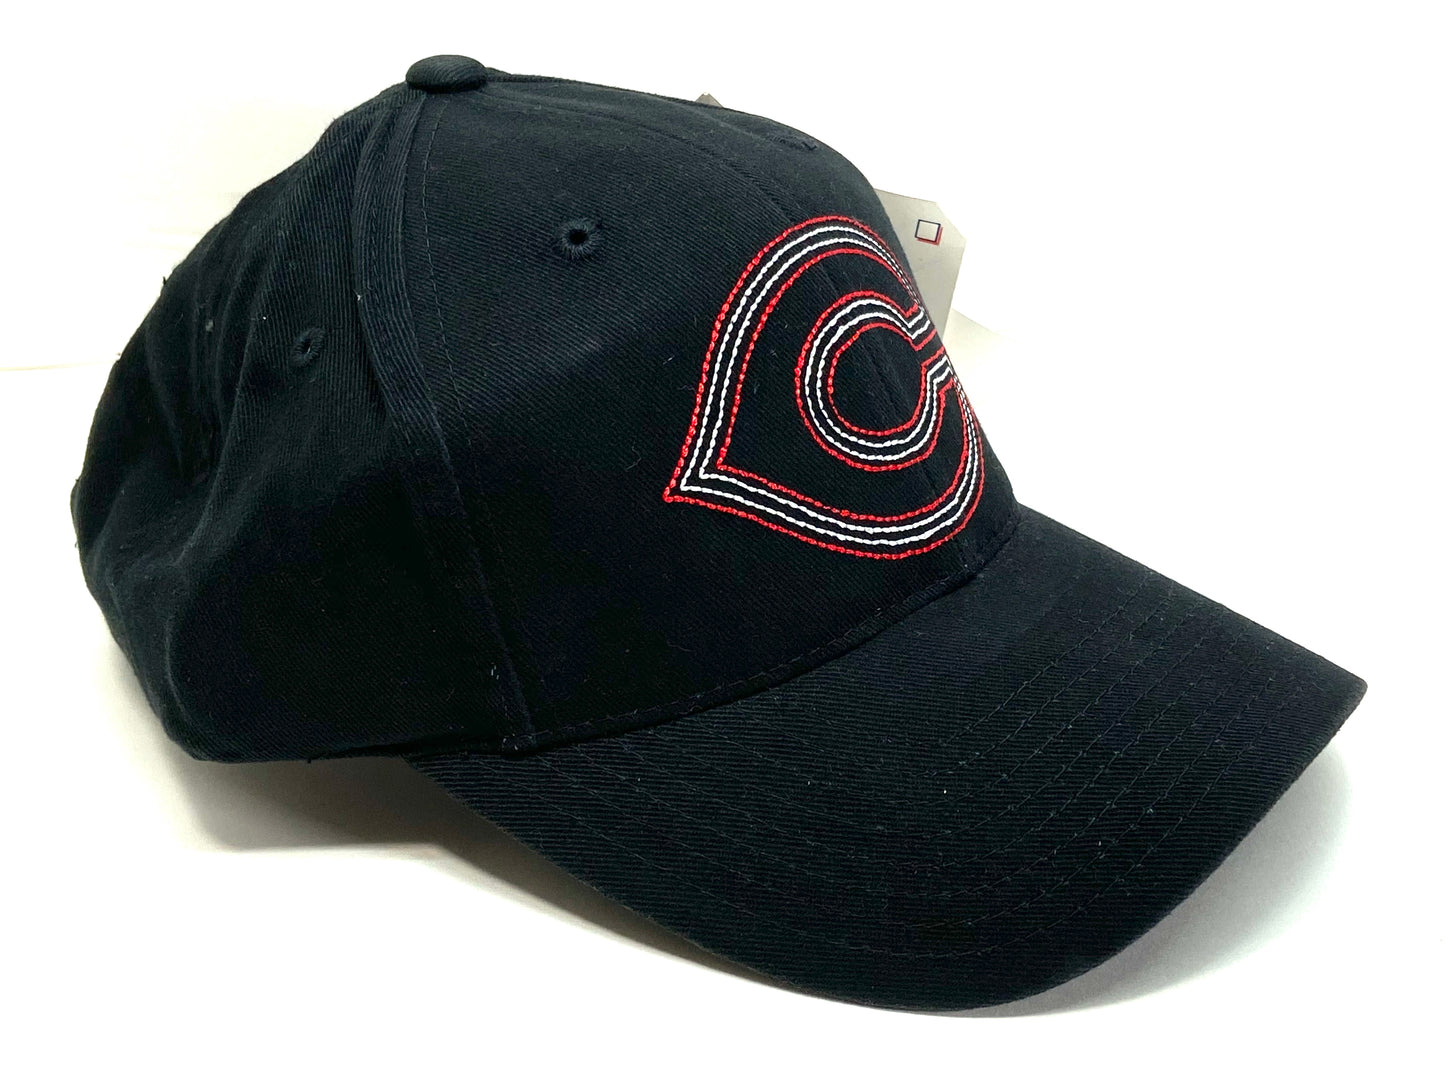 Cincinnati Reds Vintage MLB Black "Stitched" C Cap by American Needle